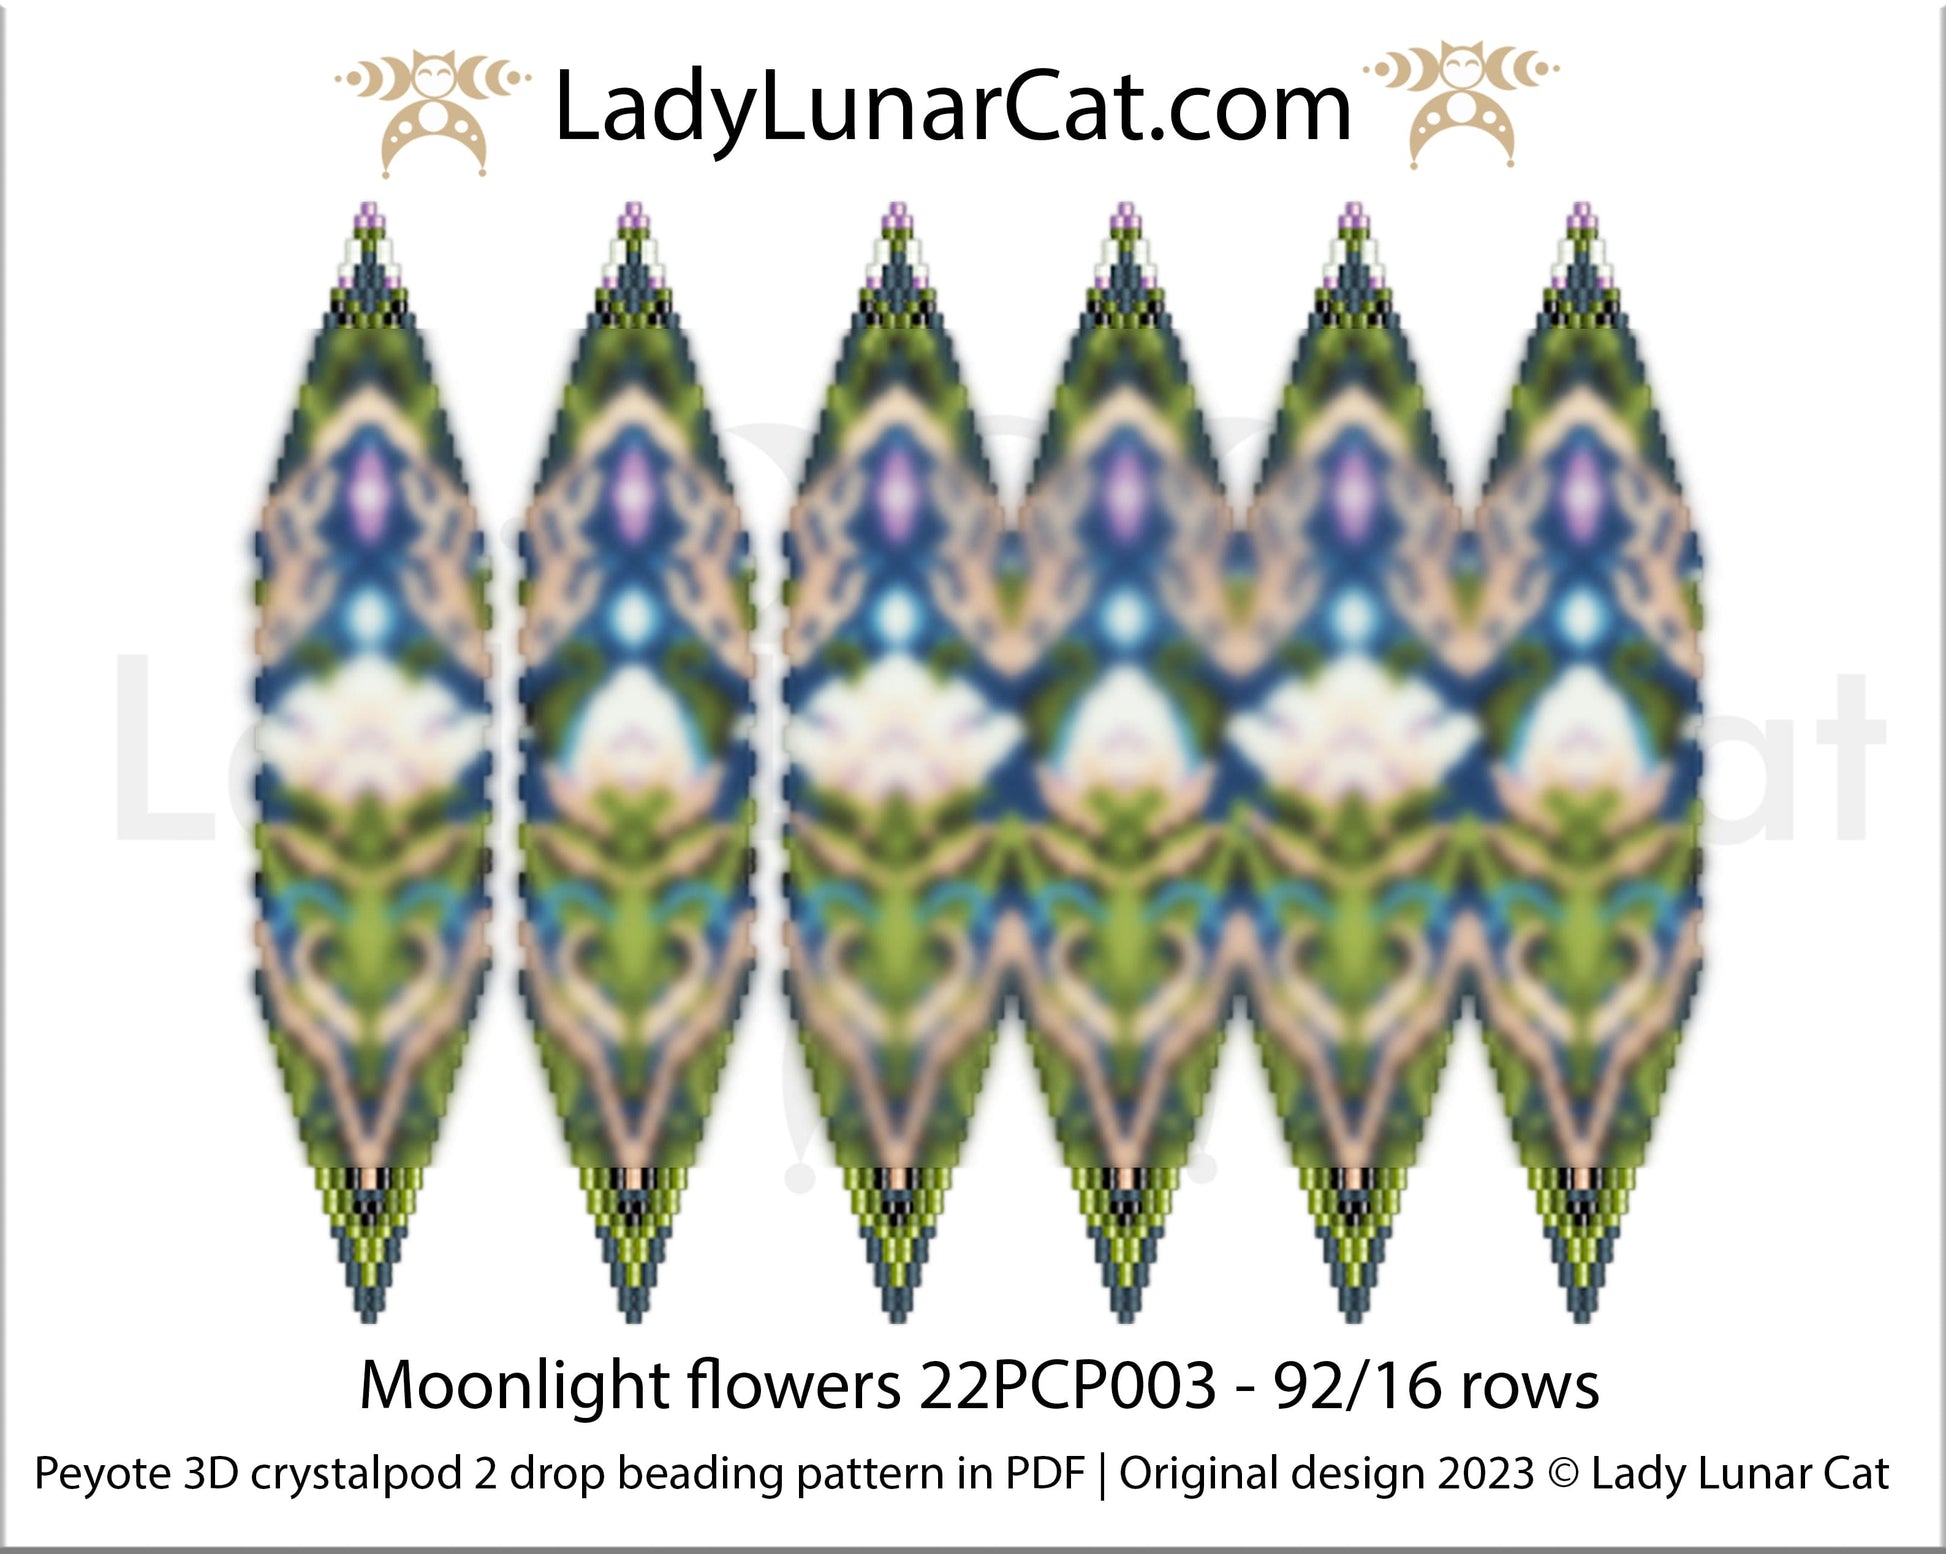 Peyote 2drop pod pattern or crystalpod pattern for beading Moonlight flowers 22PCP003 LadyLunarCat